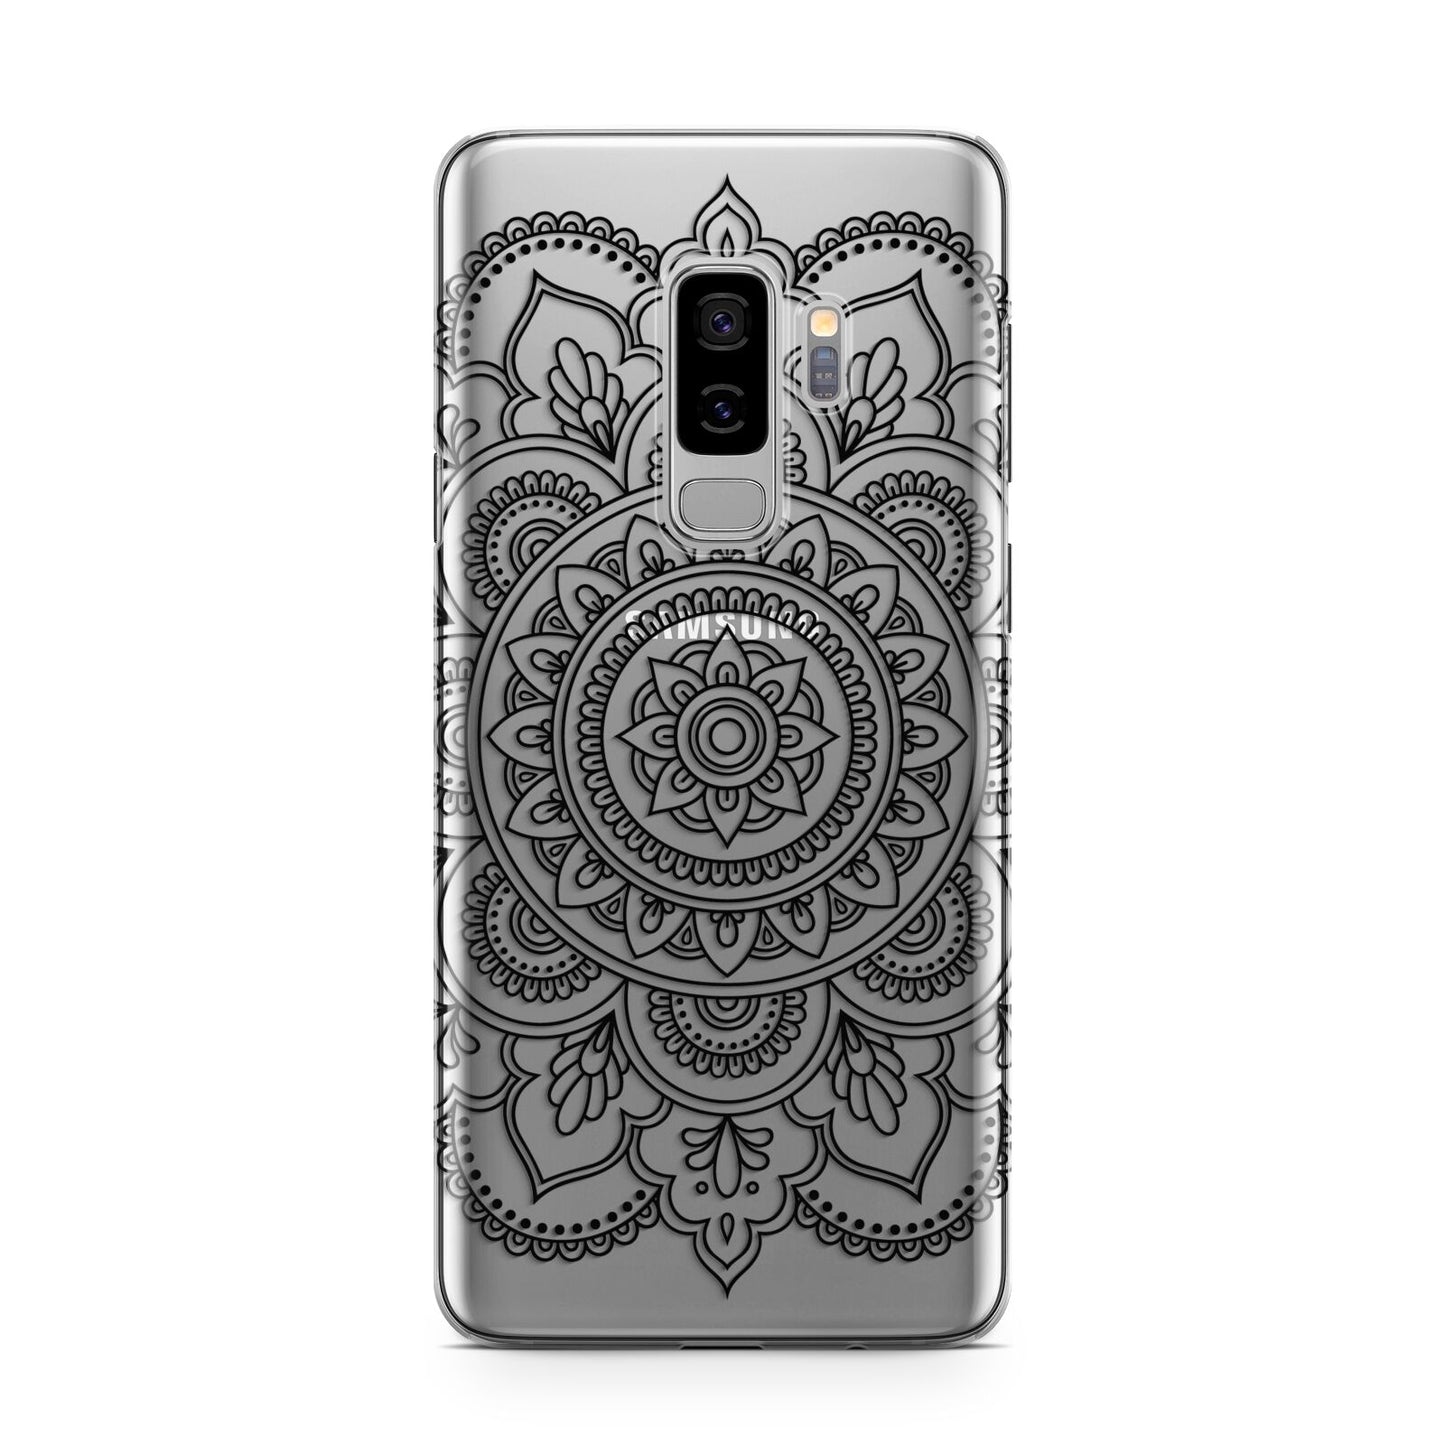 Mandala Samsung Galaxy S9 Plus Case on Silver phone